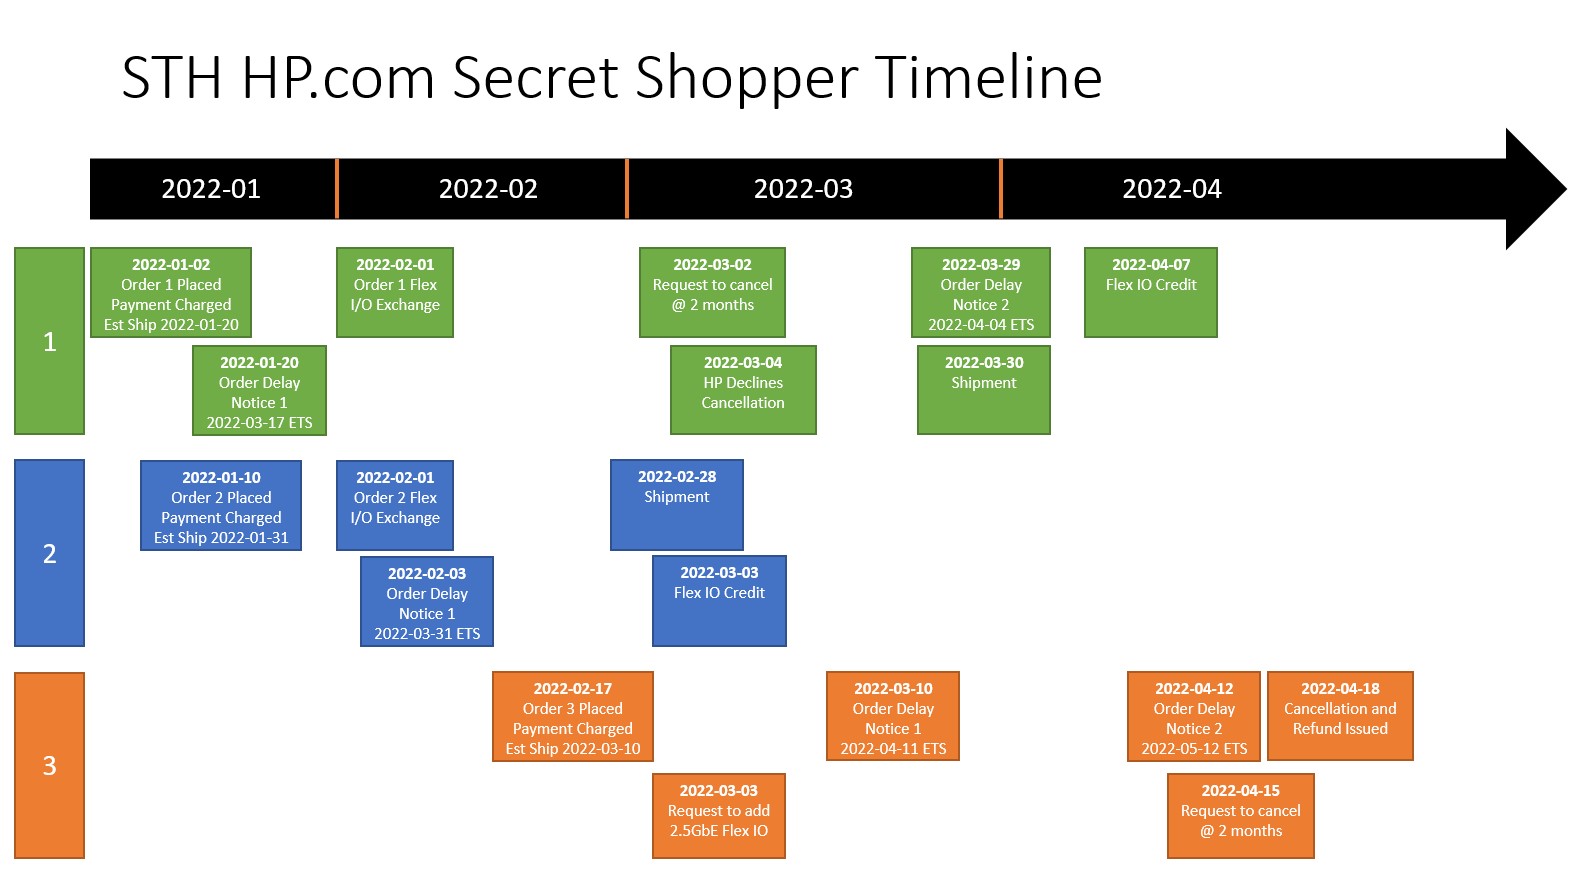 STH HP.com Secret Shopper Order 1 Order 2022 01 02 Est 2022 01 20